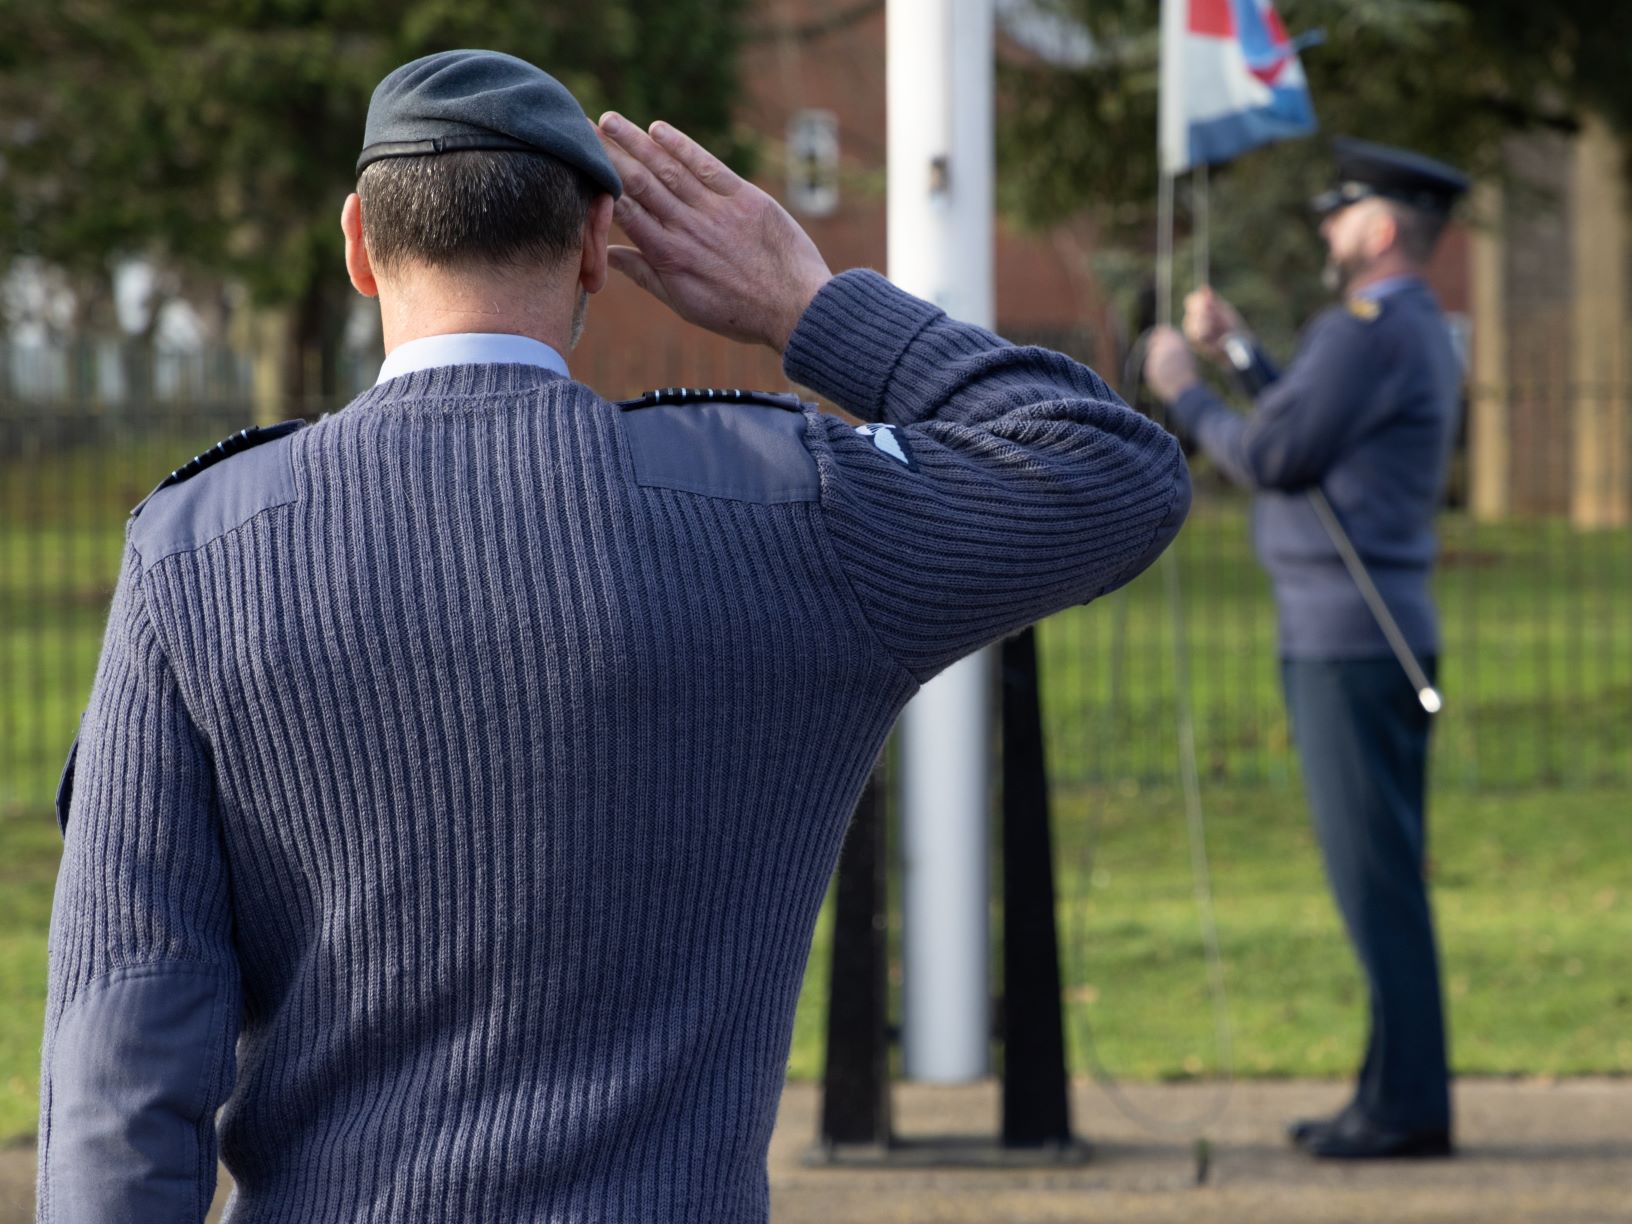 Image show Station Commander saluting a RAF aviator as he raises the flag.